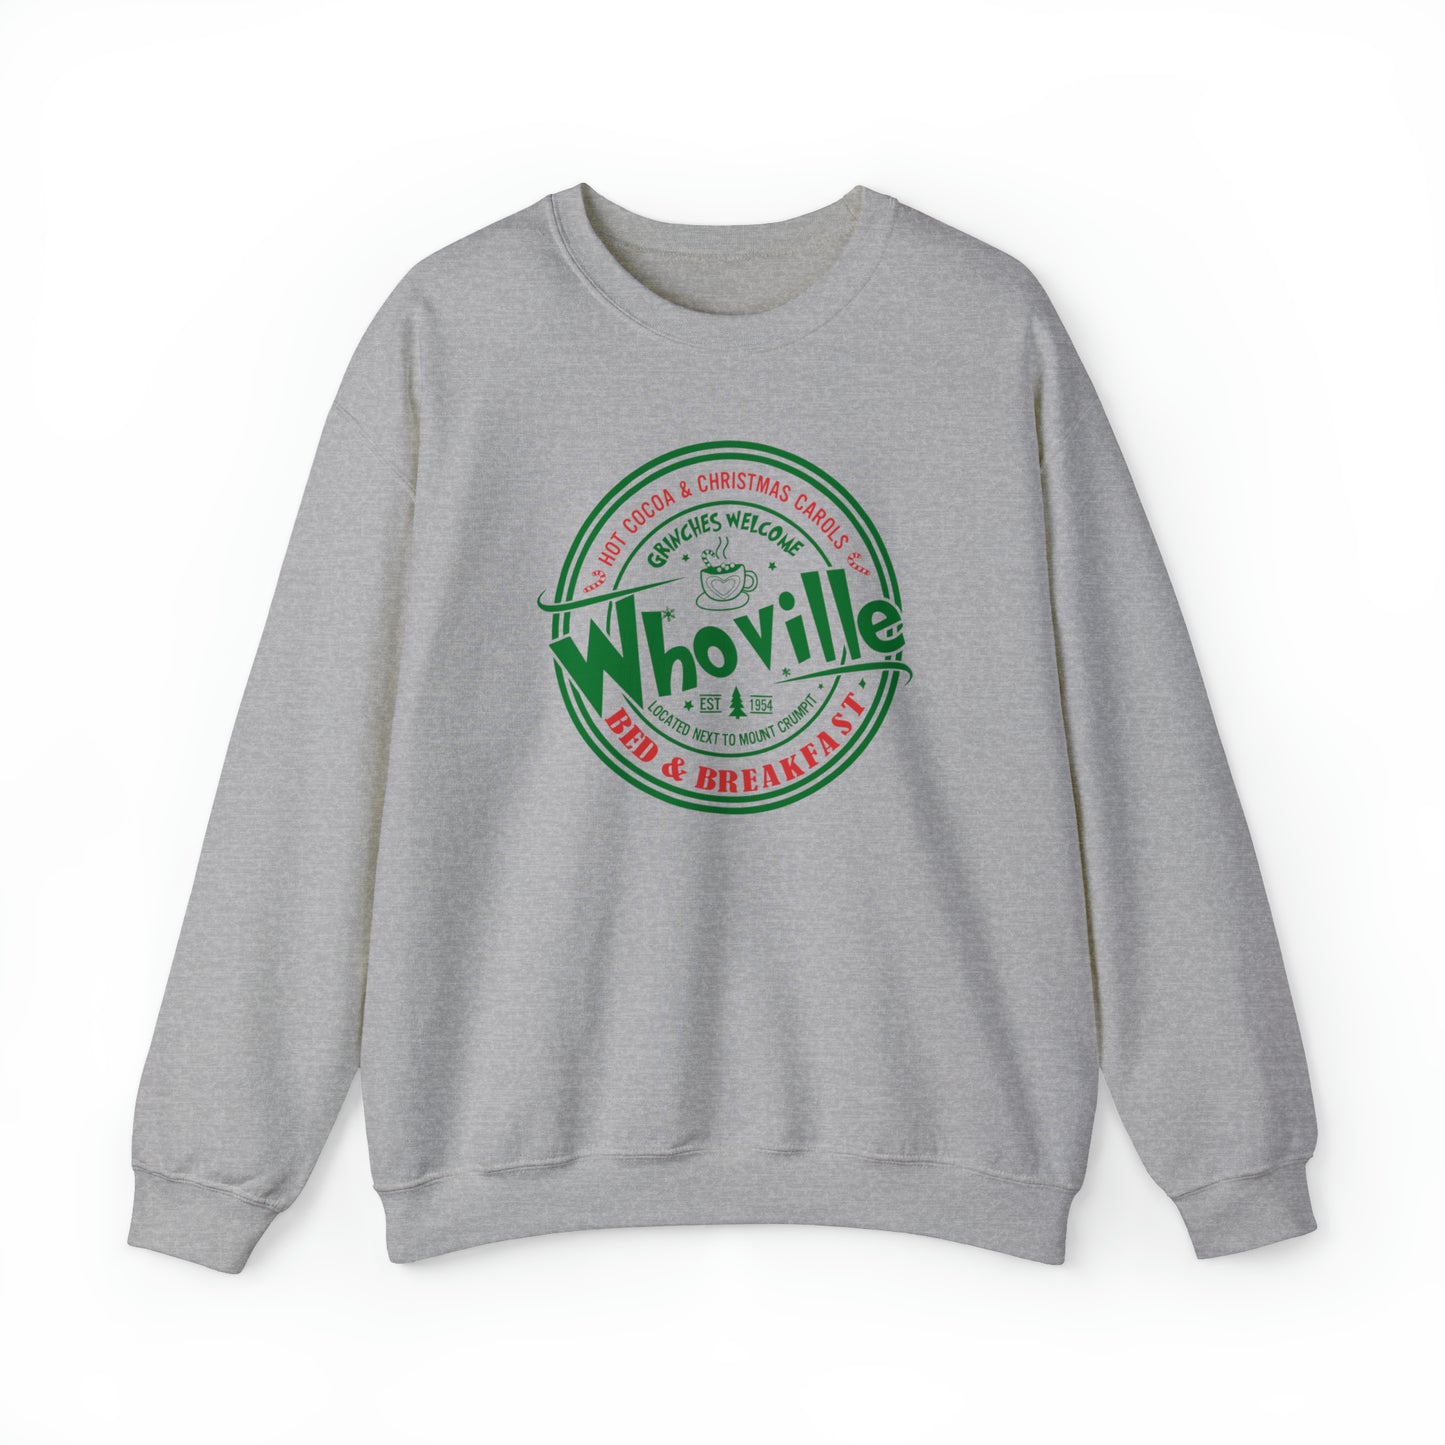 Whoville Bed & Breakfast Crewneck Sweatshirt